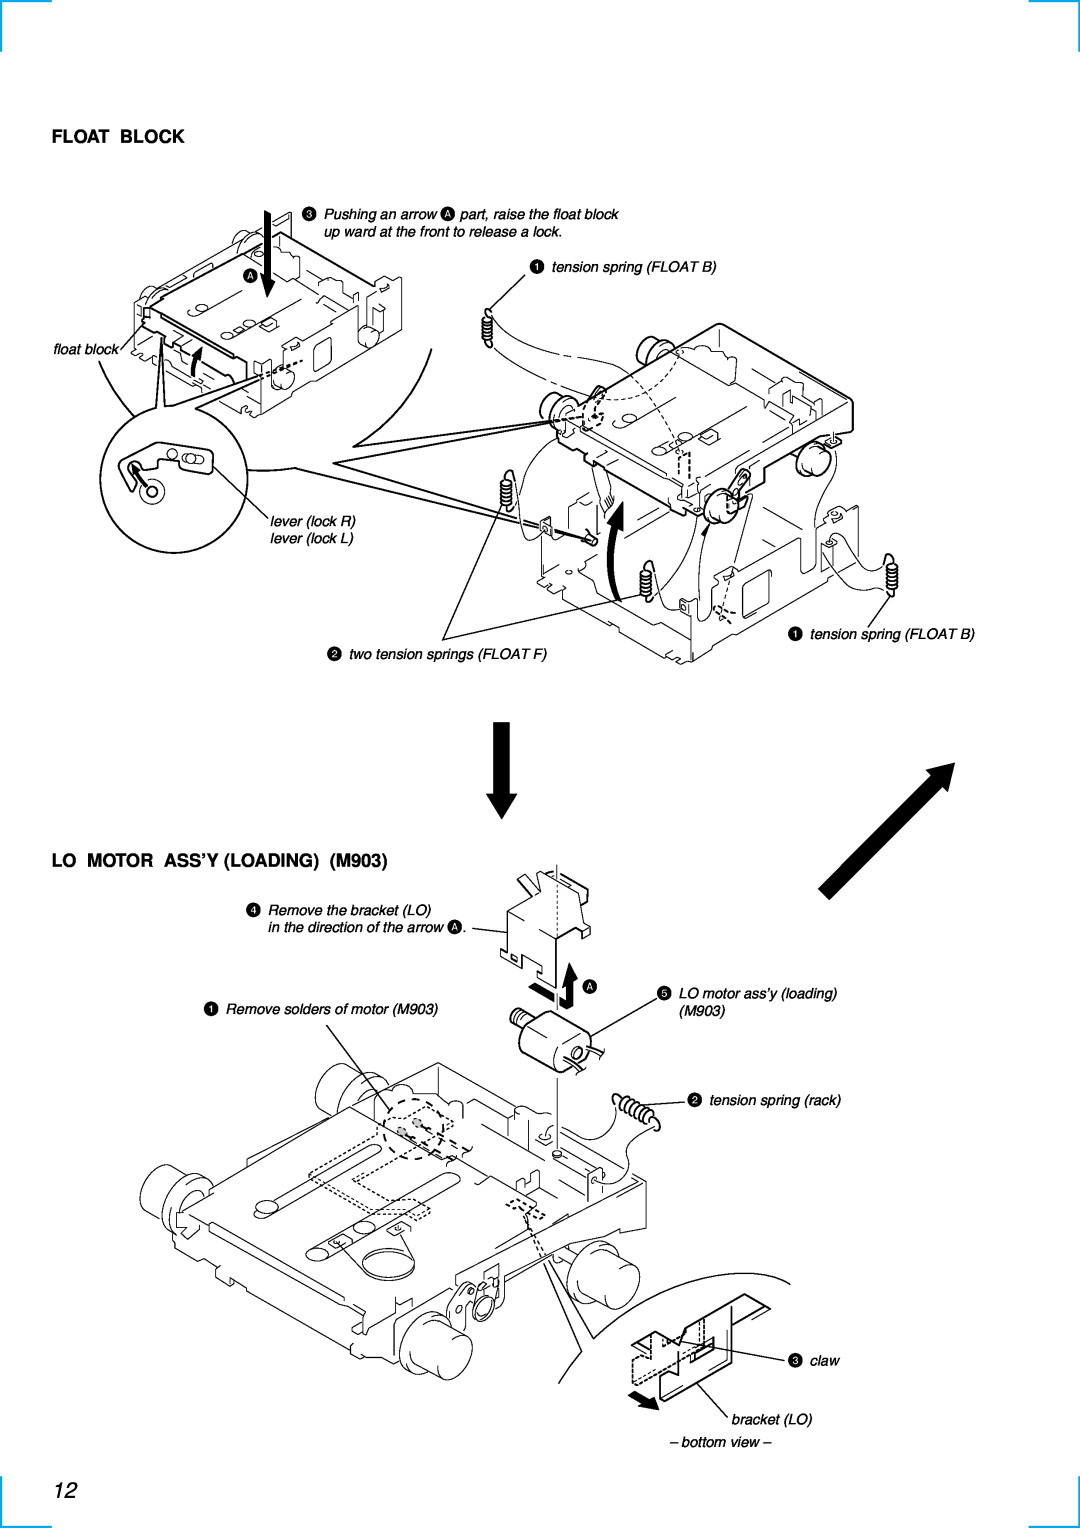 Sony MDX-C6500RX service manual Float Block, LO MOTOR ASS’Y LOADING M903 